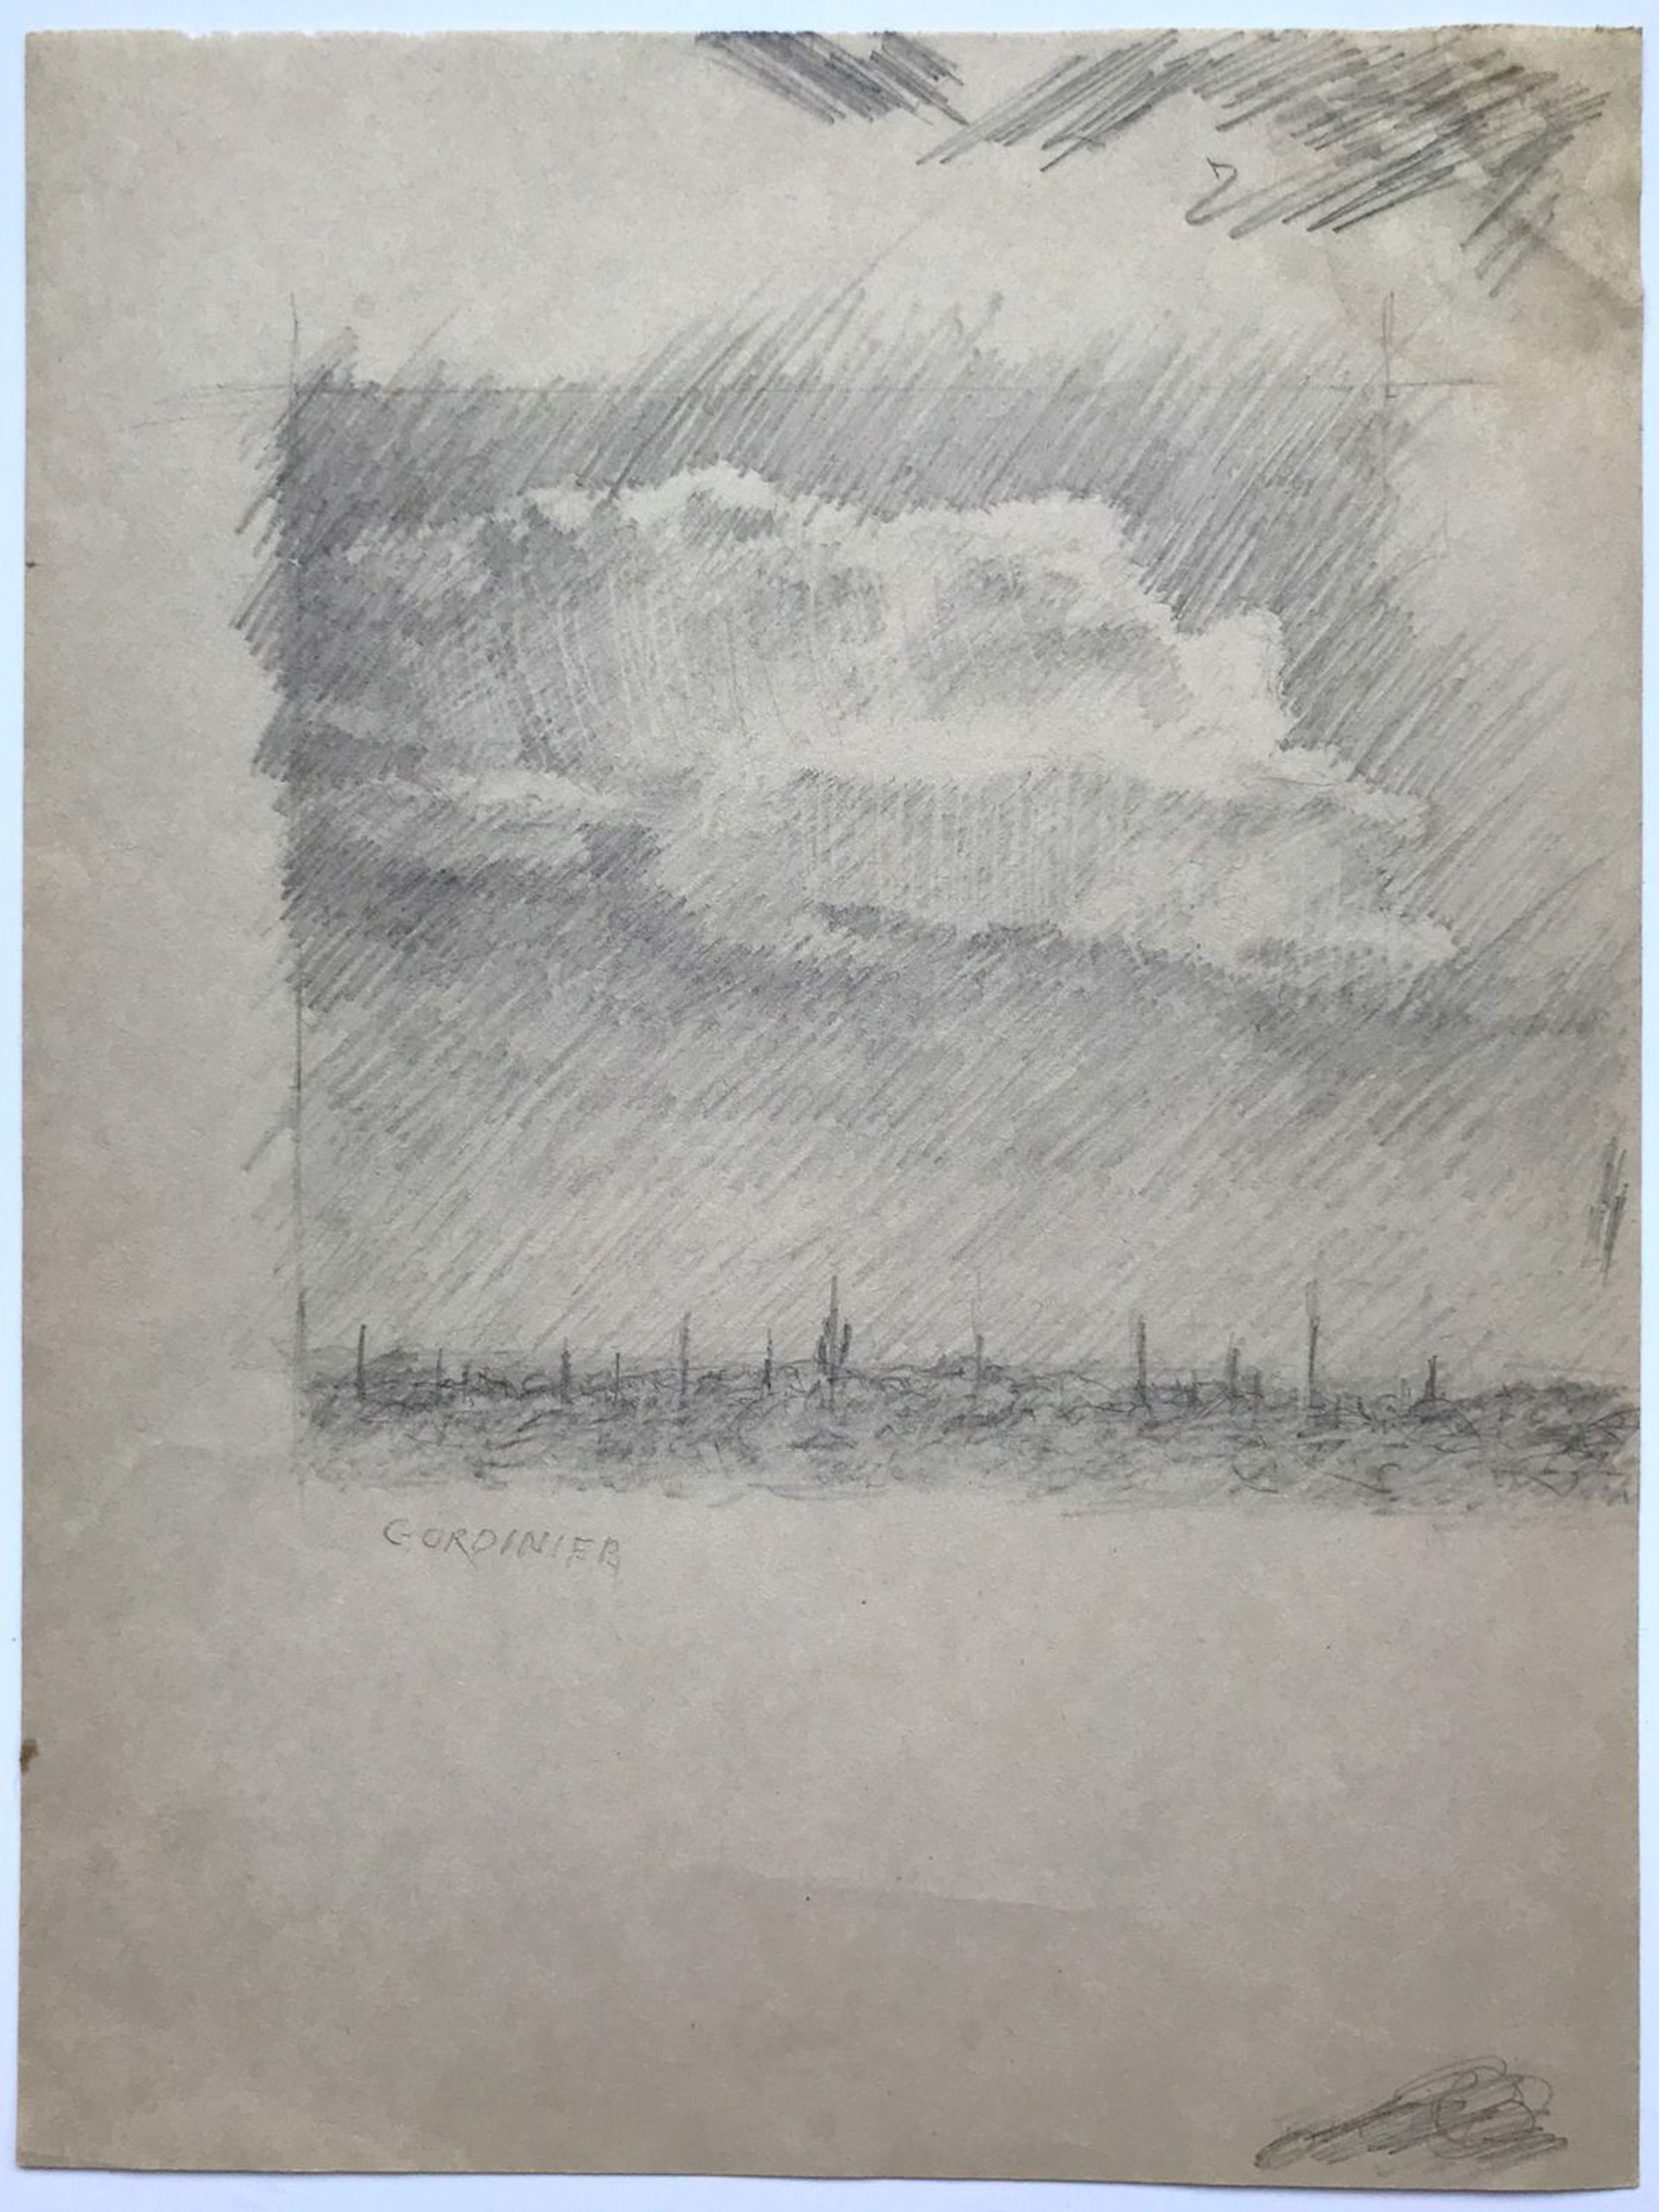 Cloud Sketch 10 by Dave Gordinier